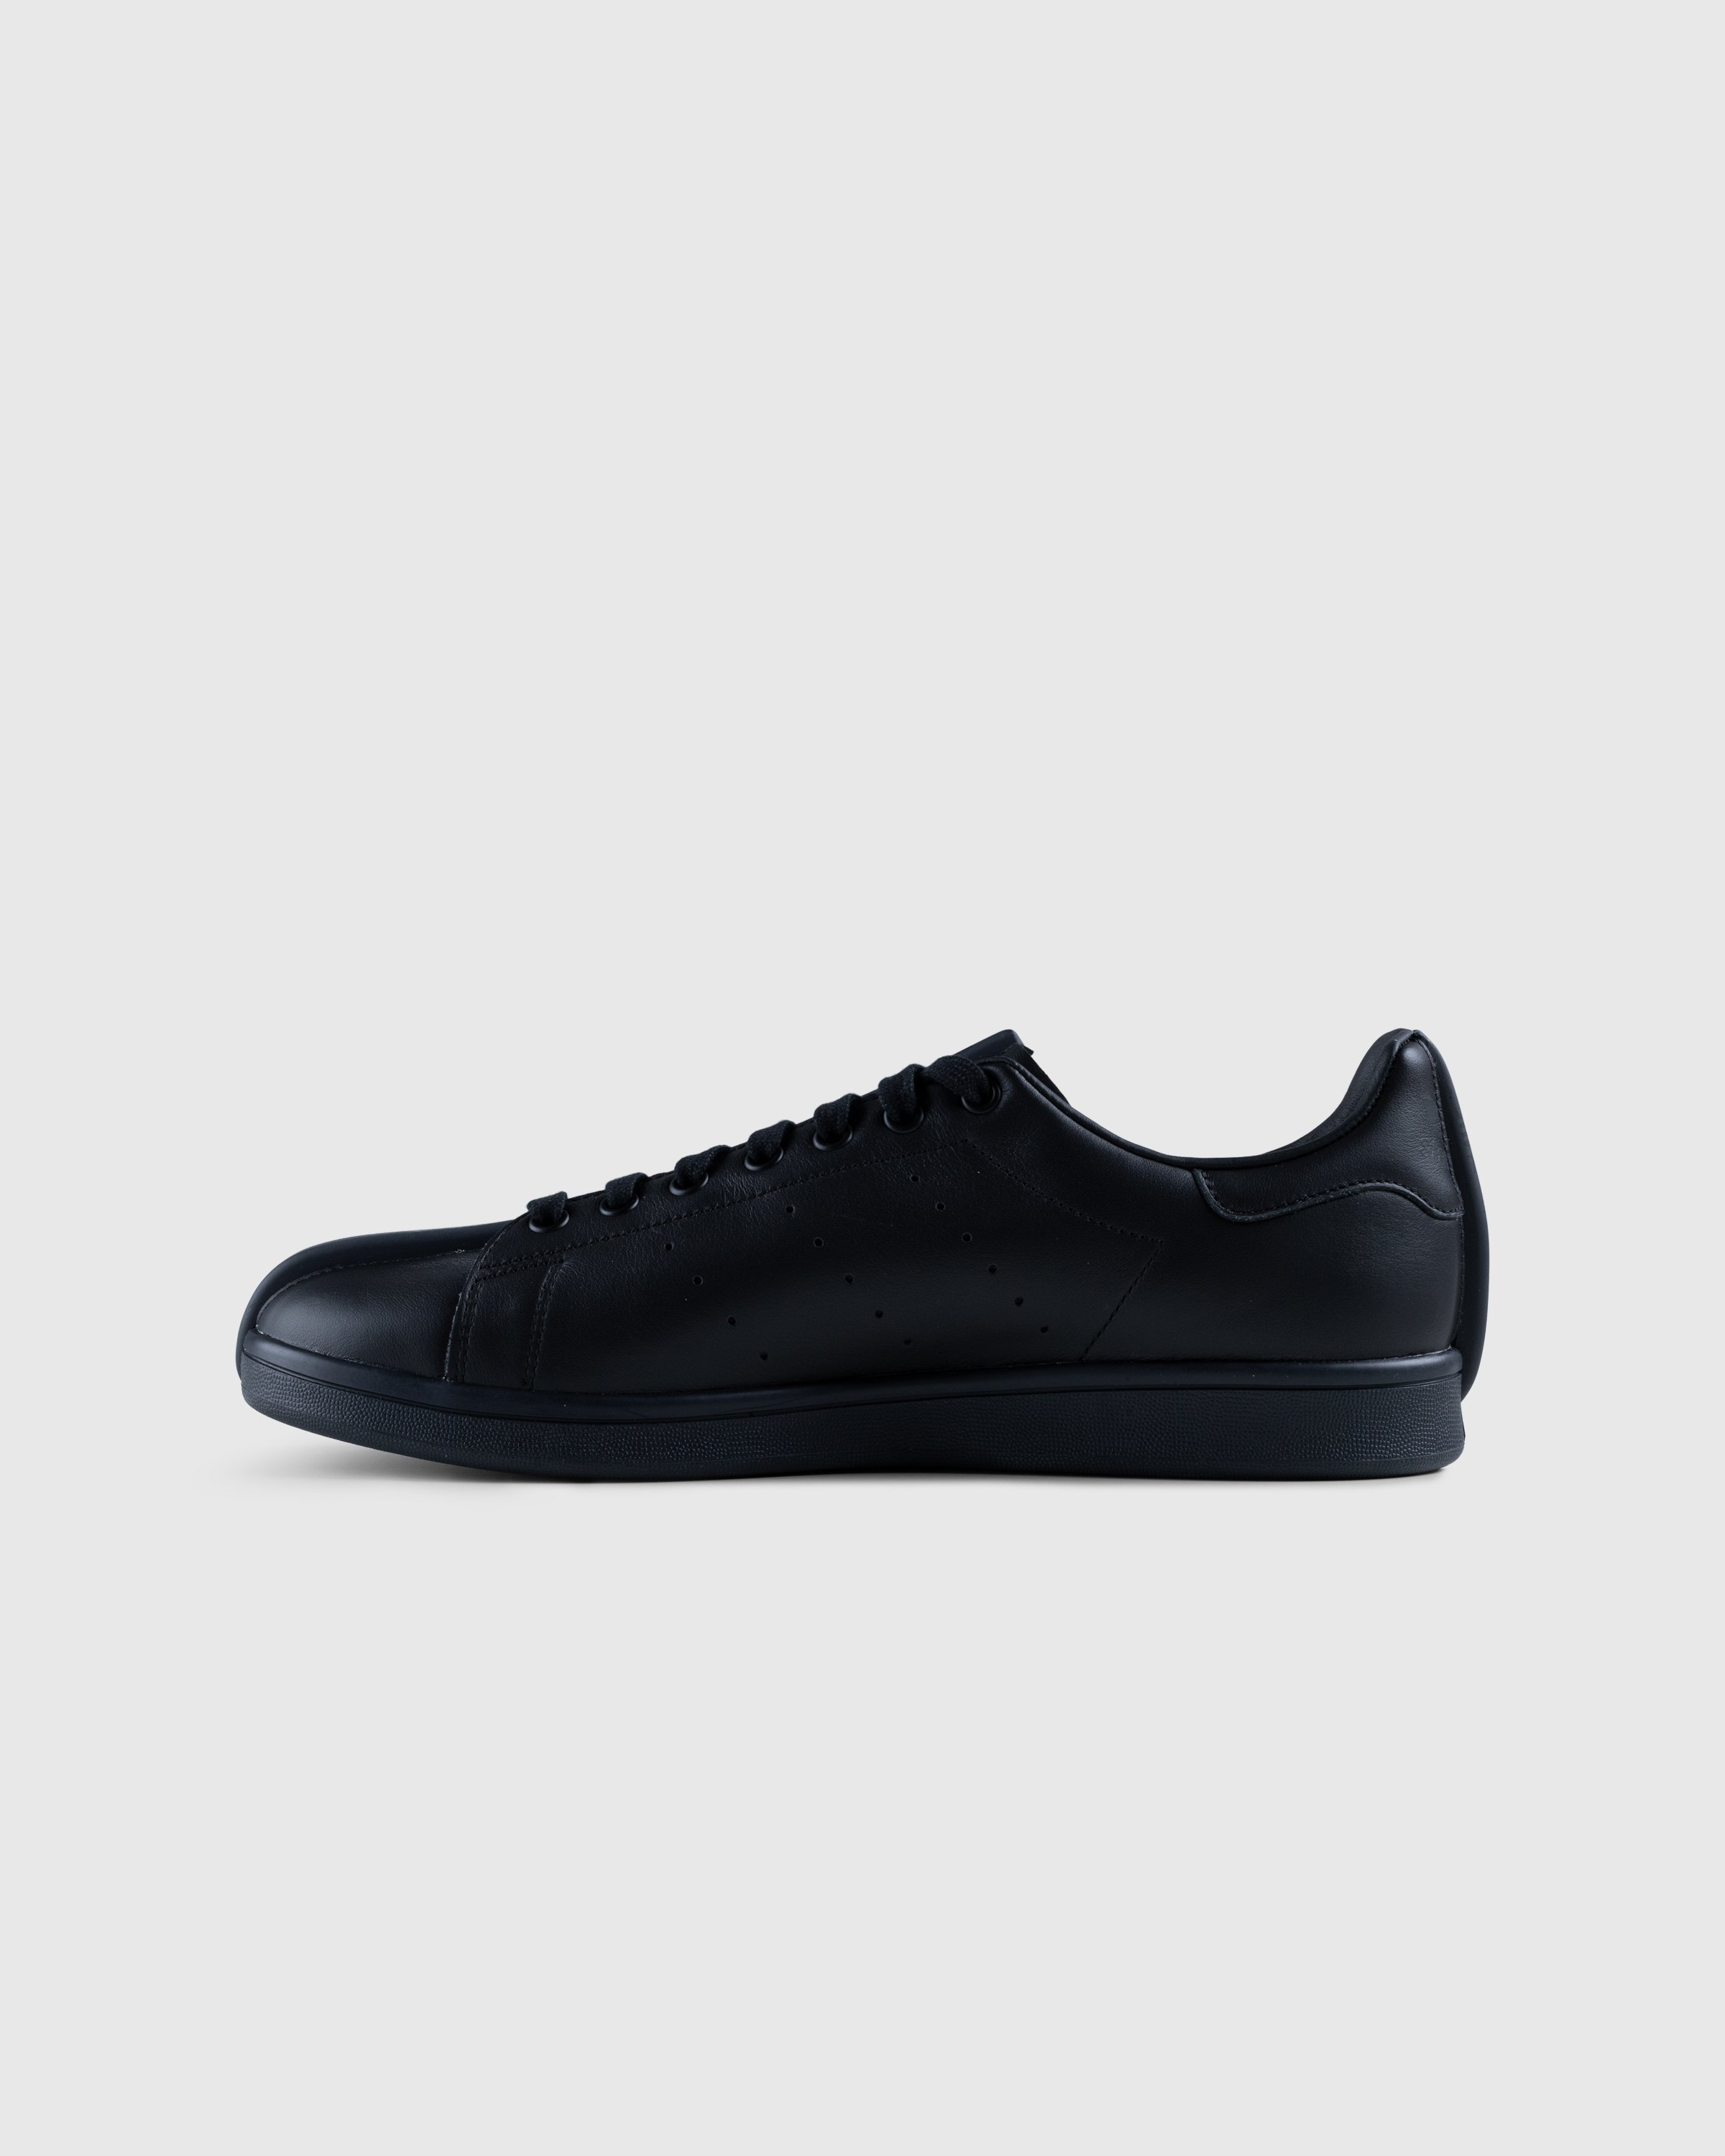 Craig Green x Adidas - CG Split Stan Smith core black/core black/granite - Footwear - Black - Image 2